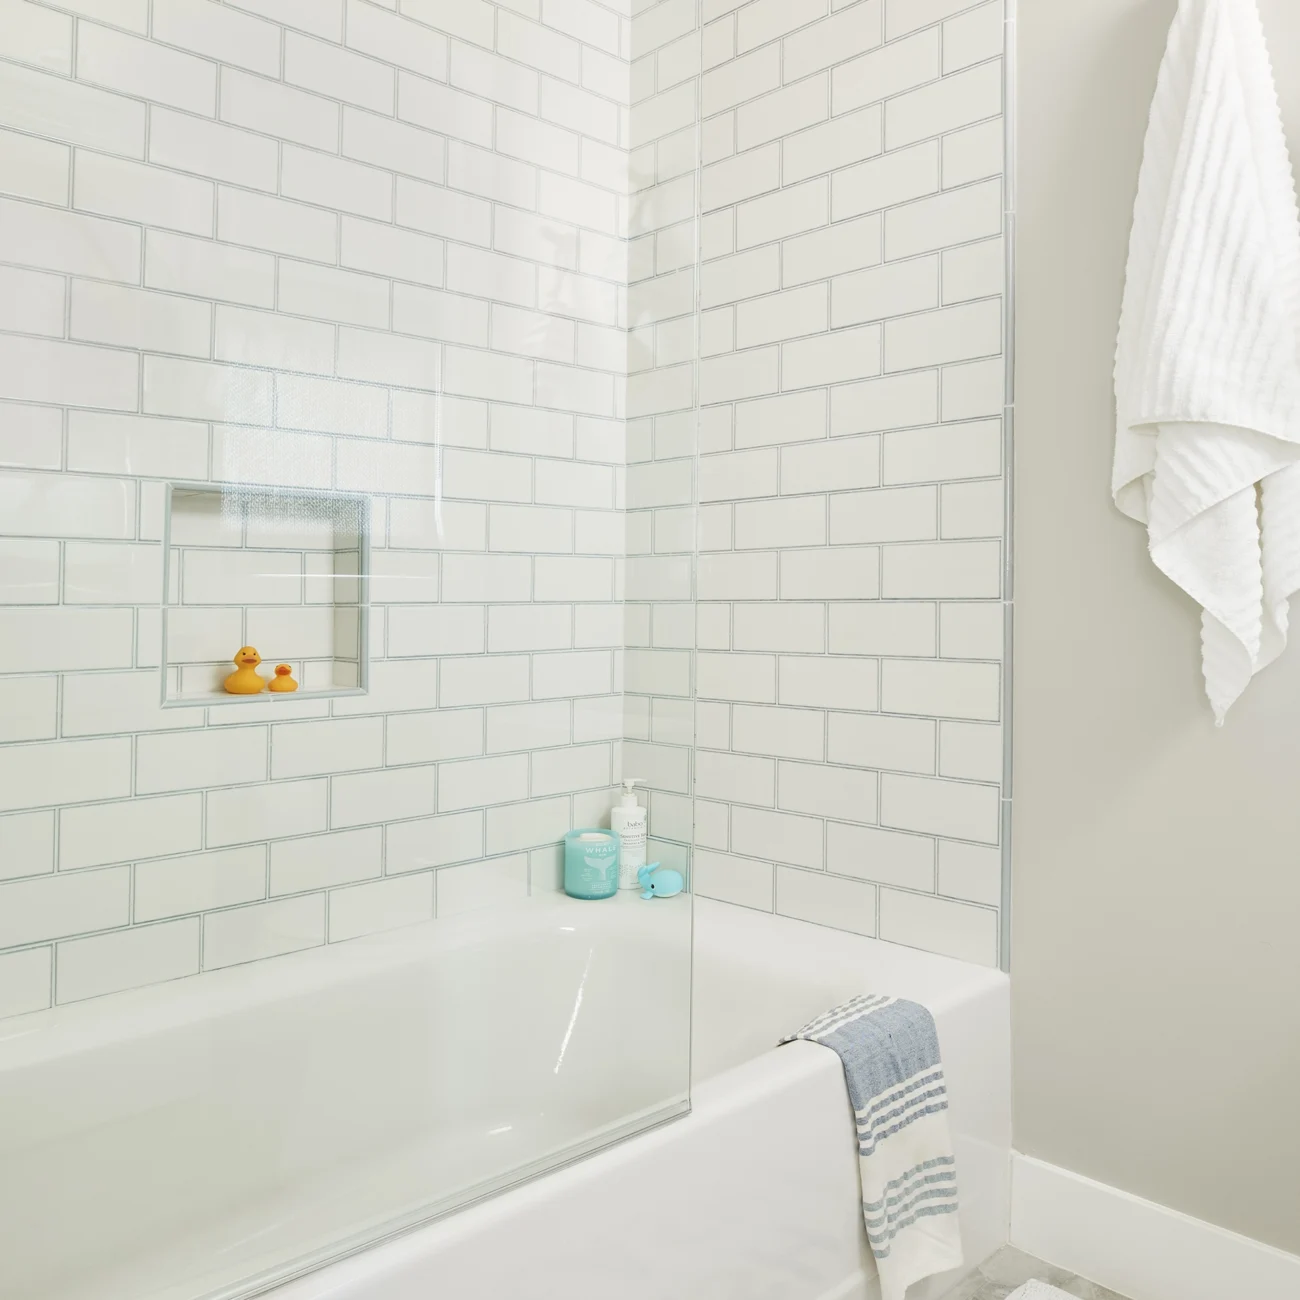 Christine Vroom Interiors | 27th | bright, costal bathroom with subway tile